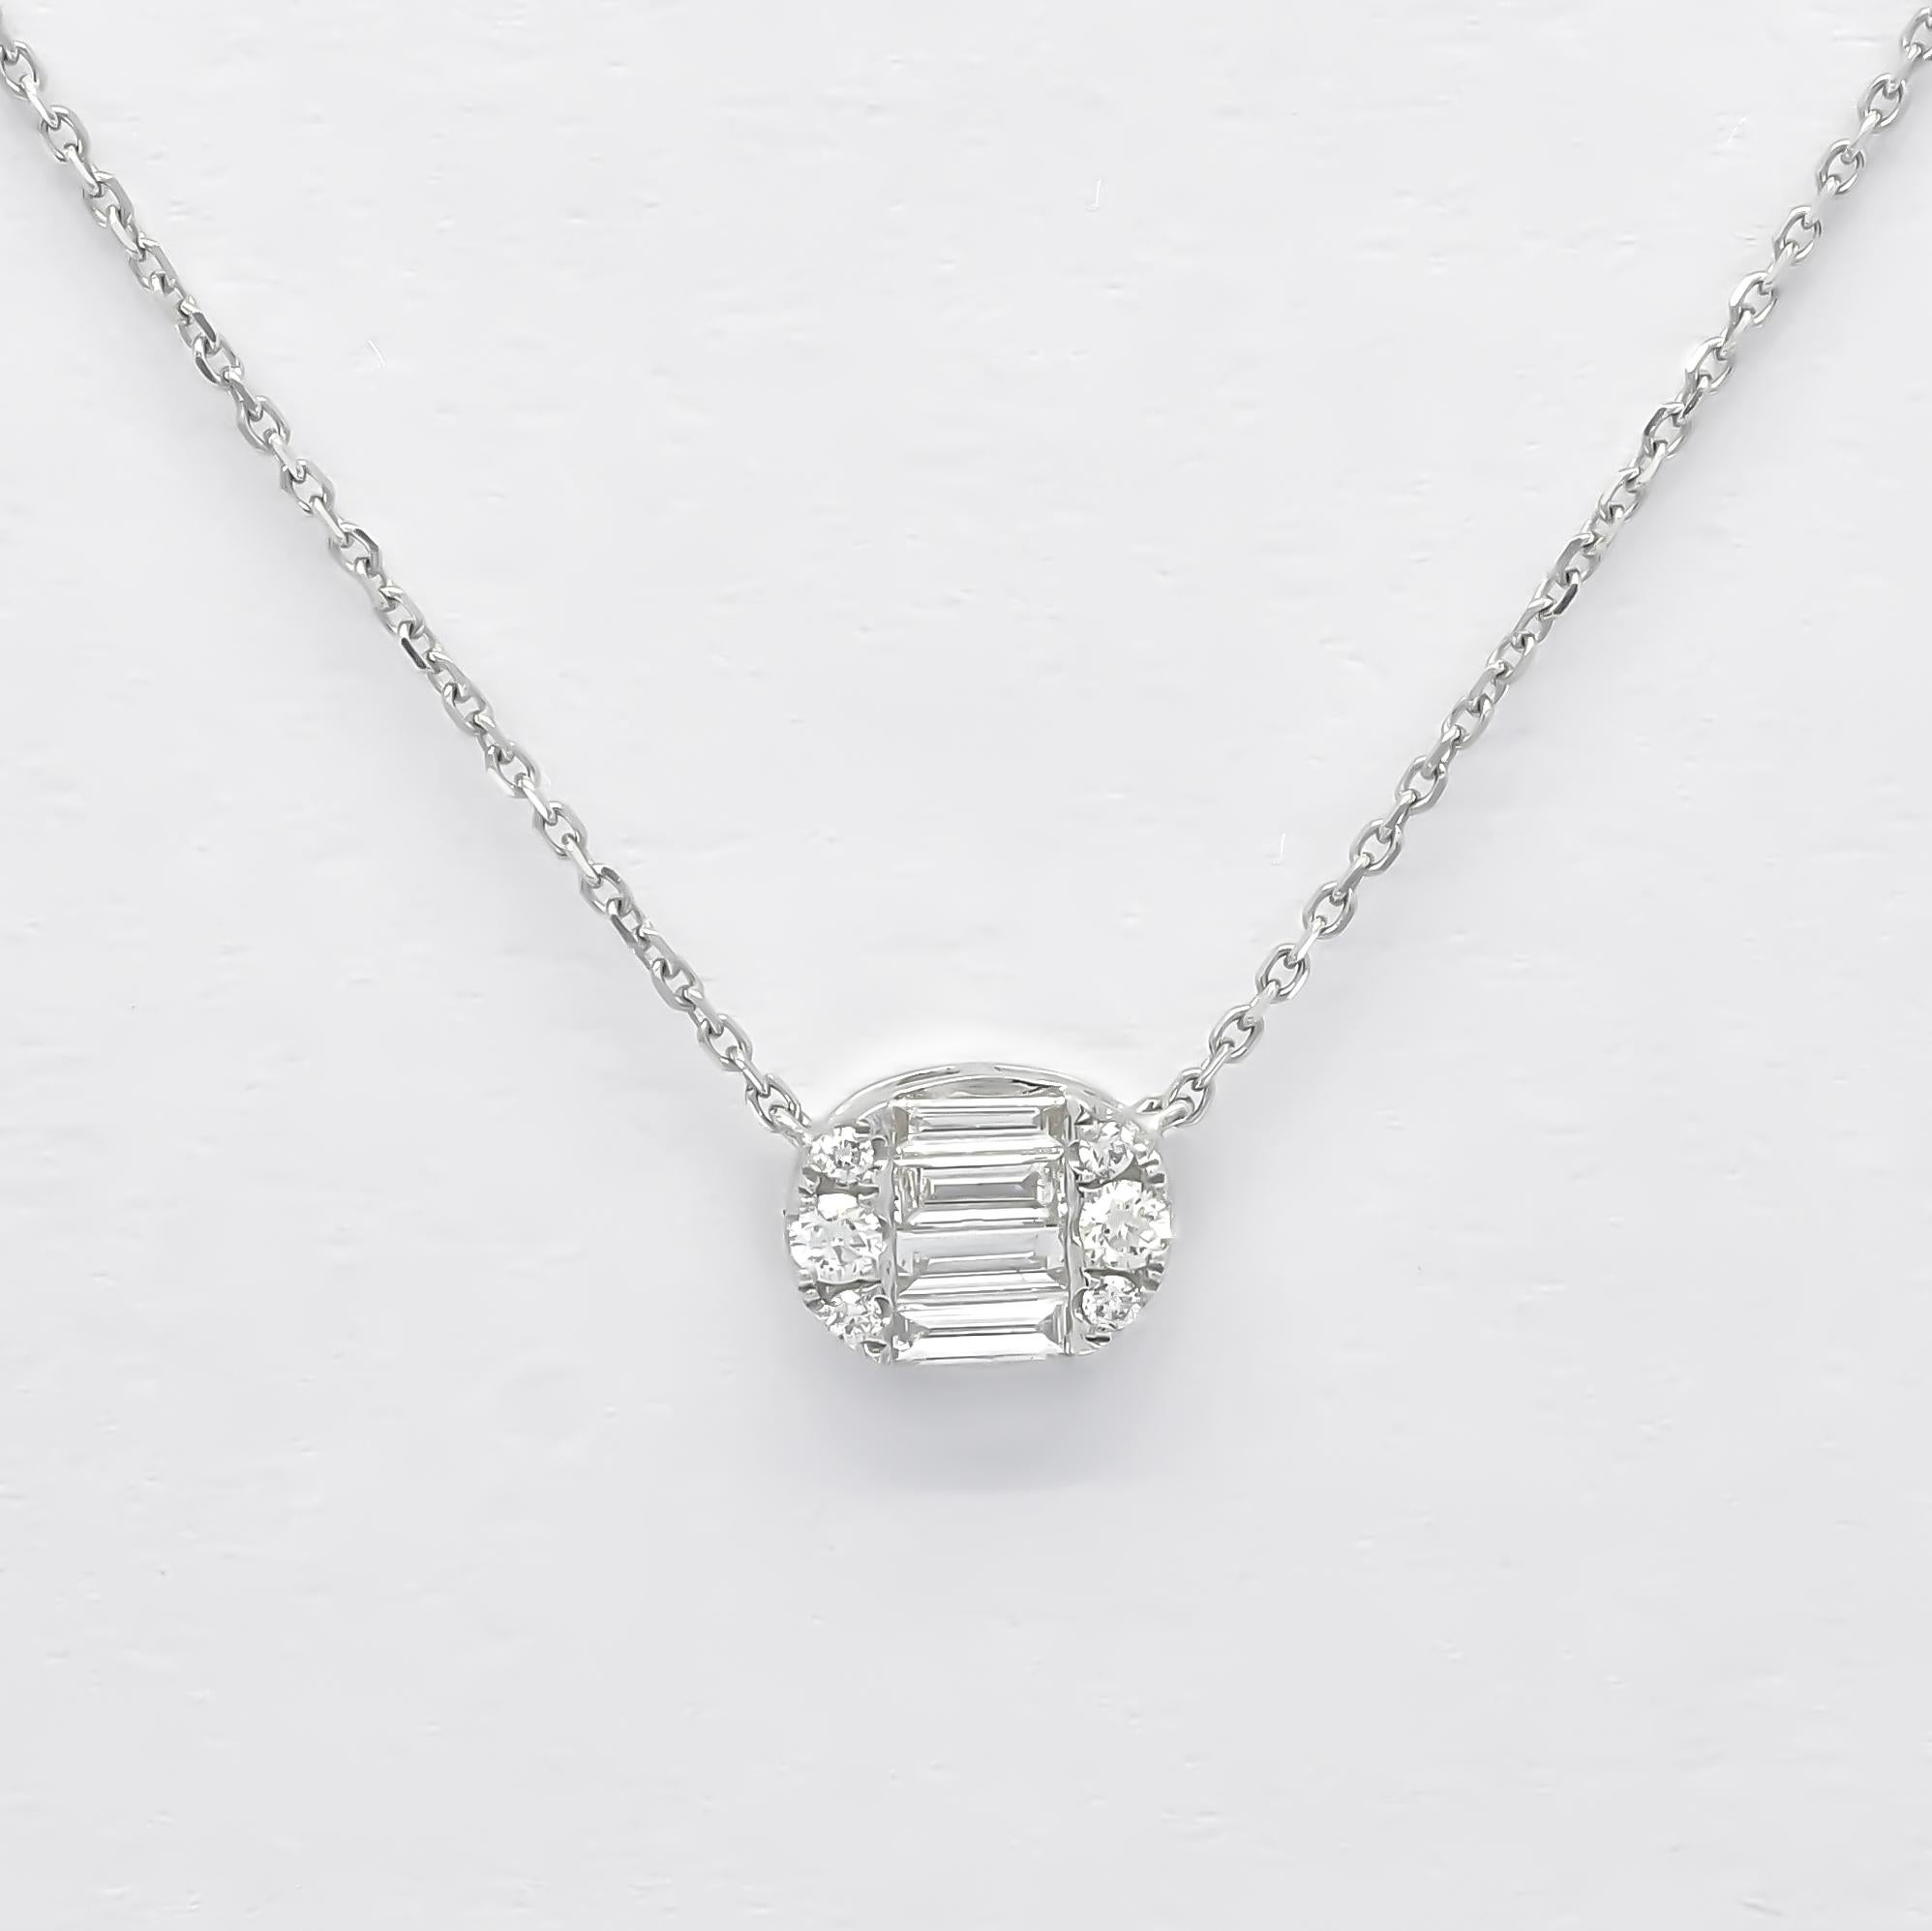 Baguette Cut Natural Diamond Pendant 0.40 cts 18KT White Gold Oval Shape Chain Necklace   For Sale